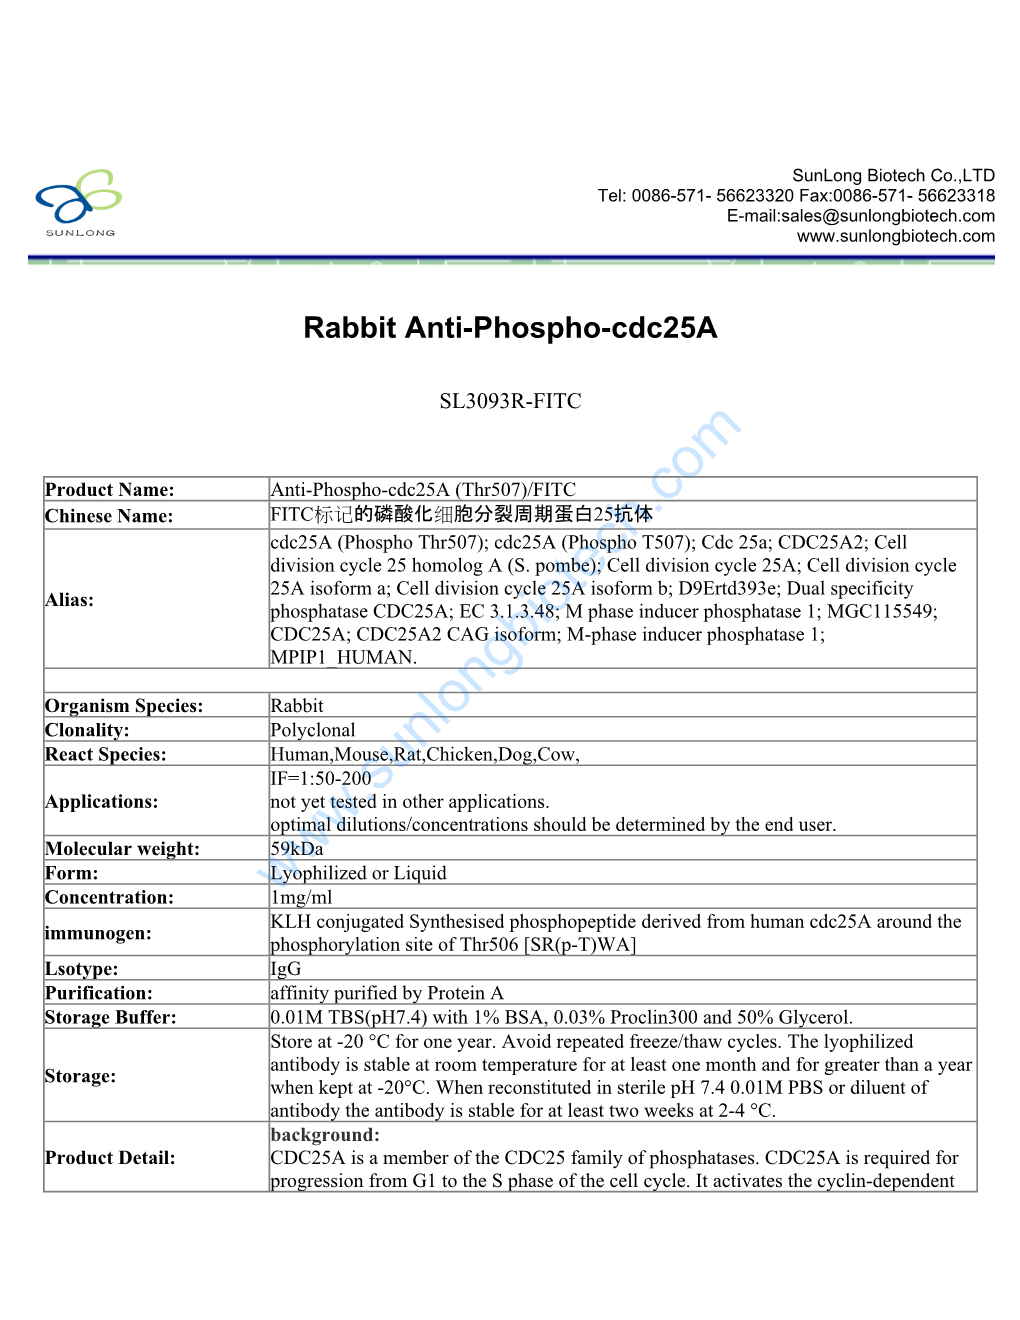 Rabbit Anti-Phospho-Cdc25a-SL3093R-FITC